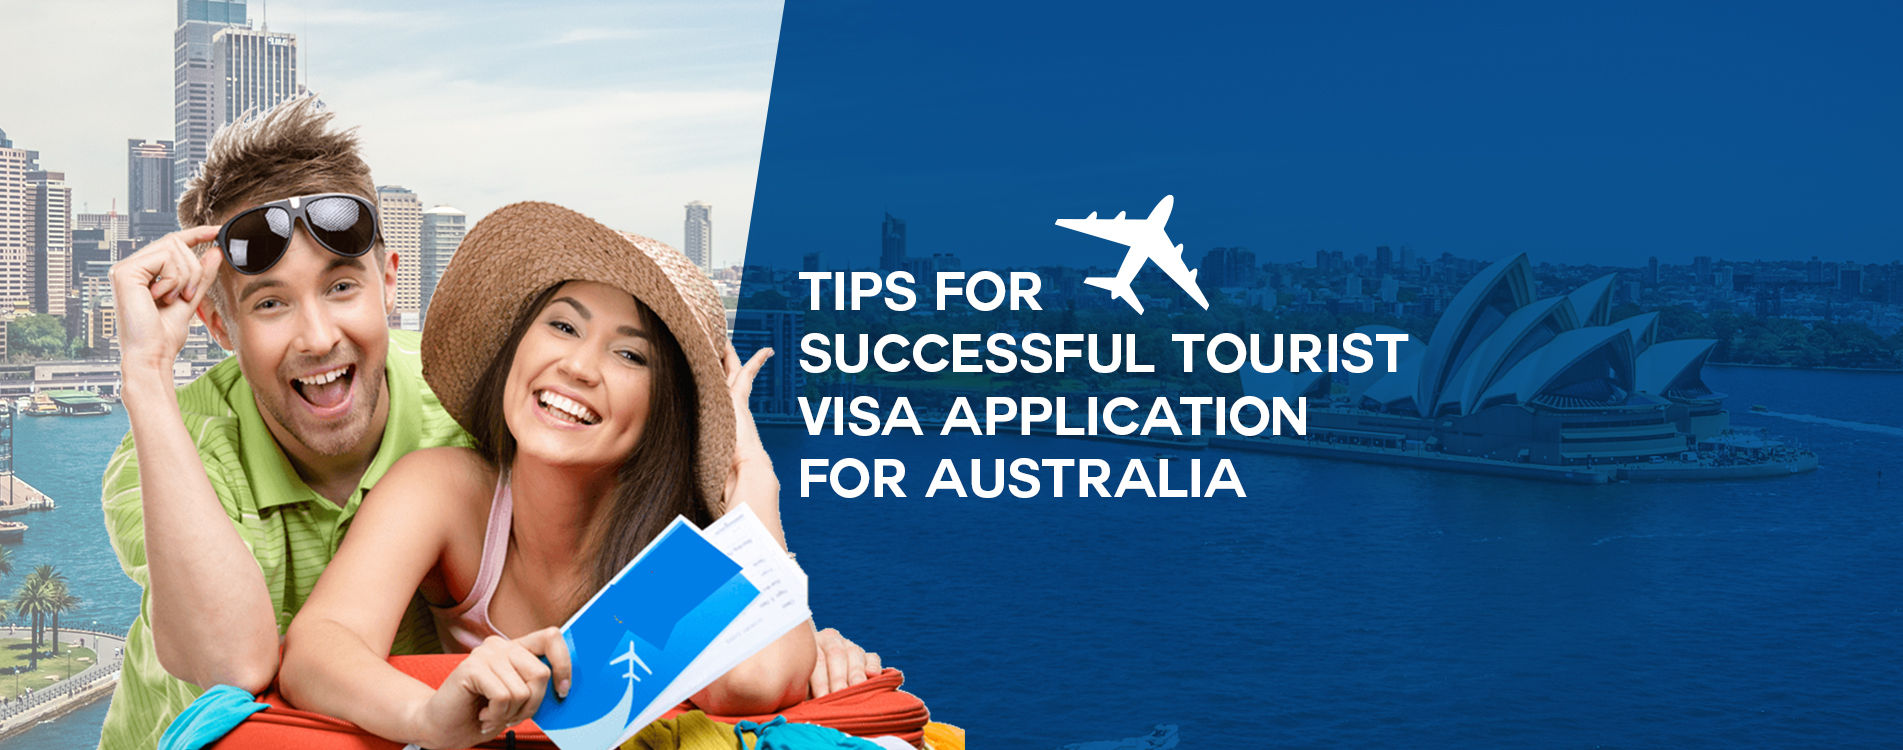 Tips for Successful Tourist Visa Application for Australia